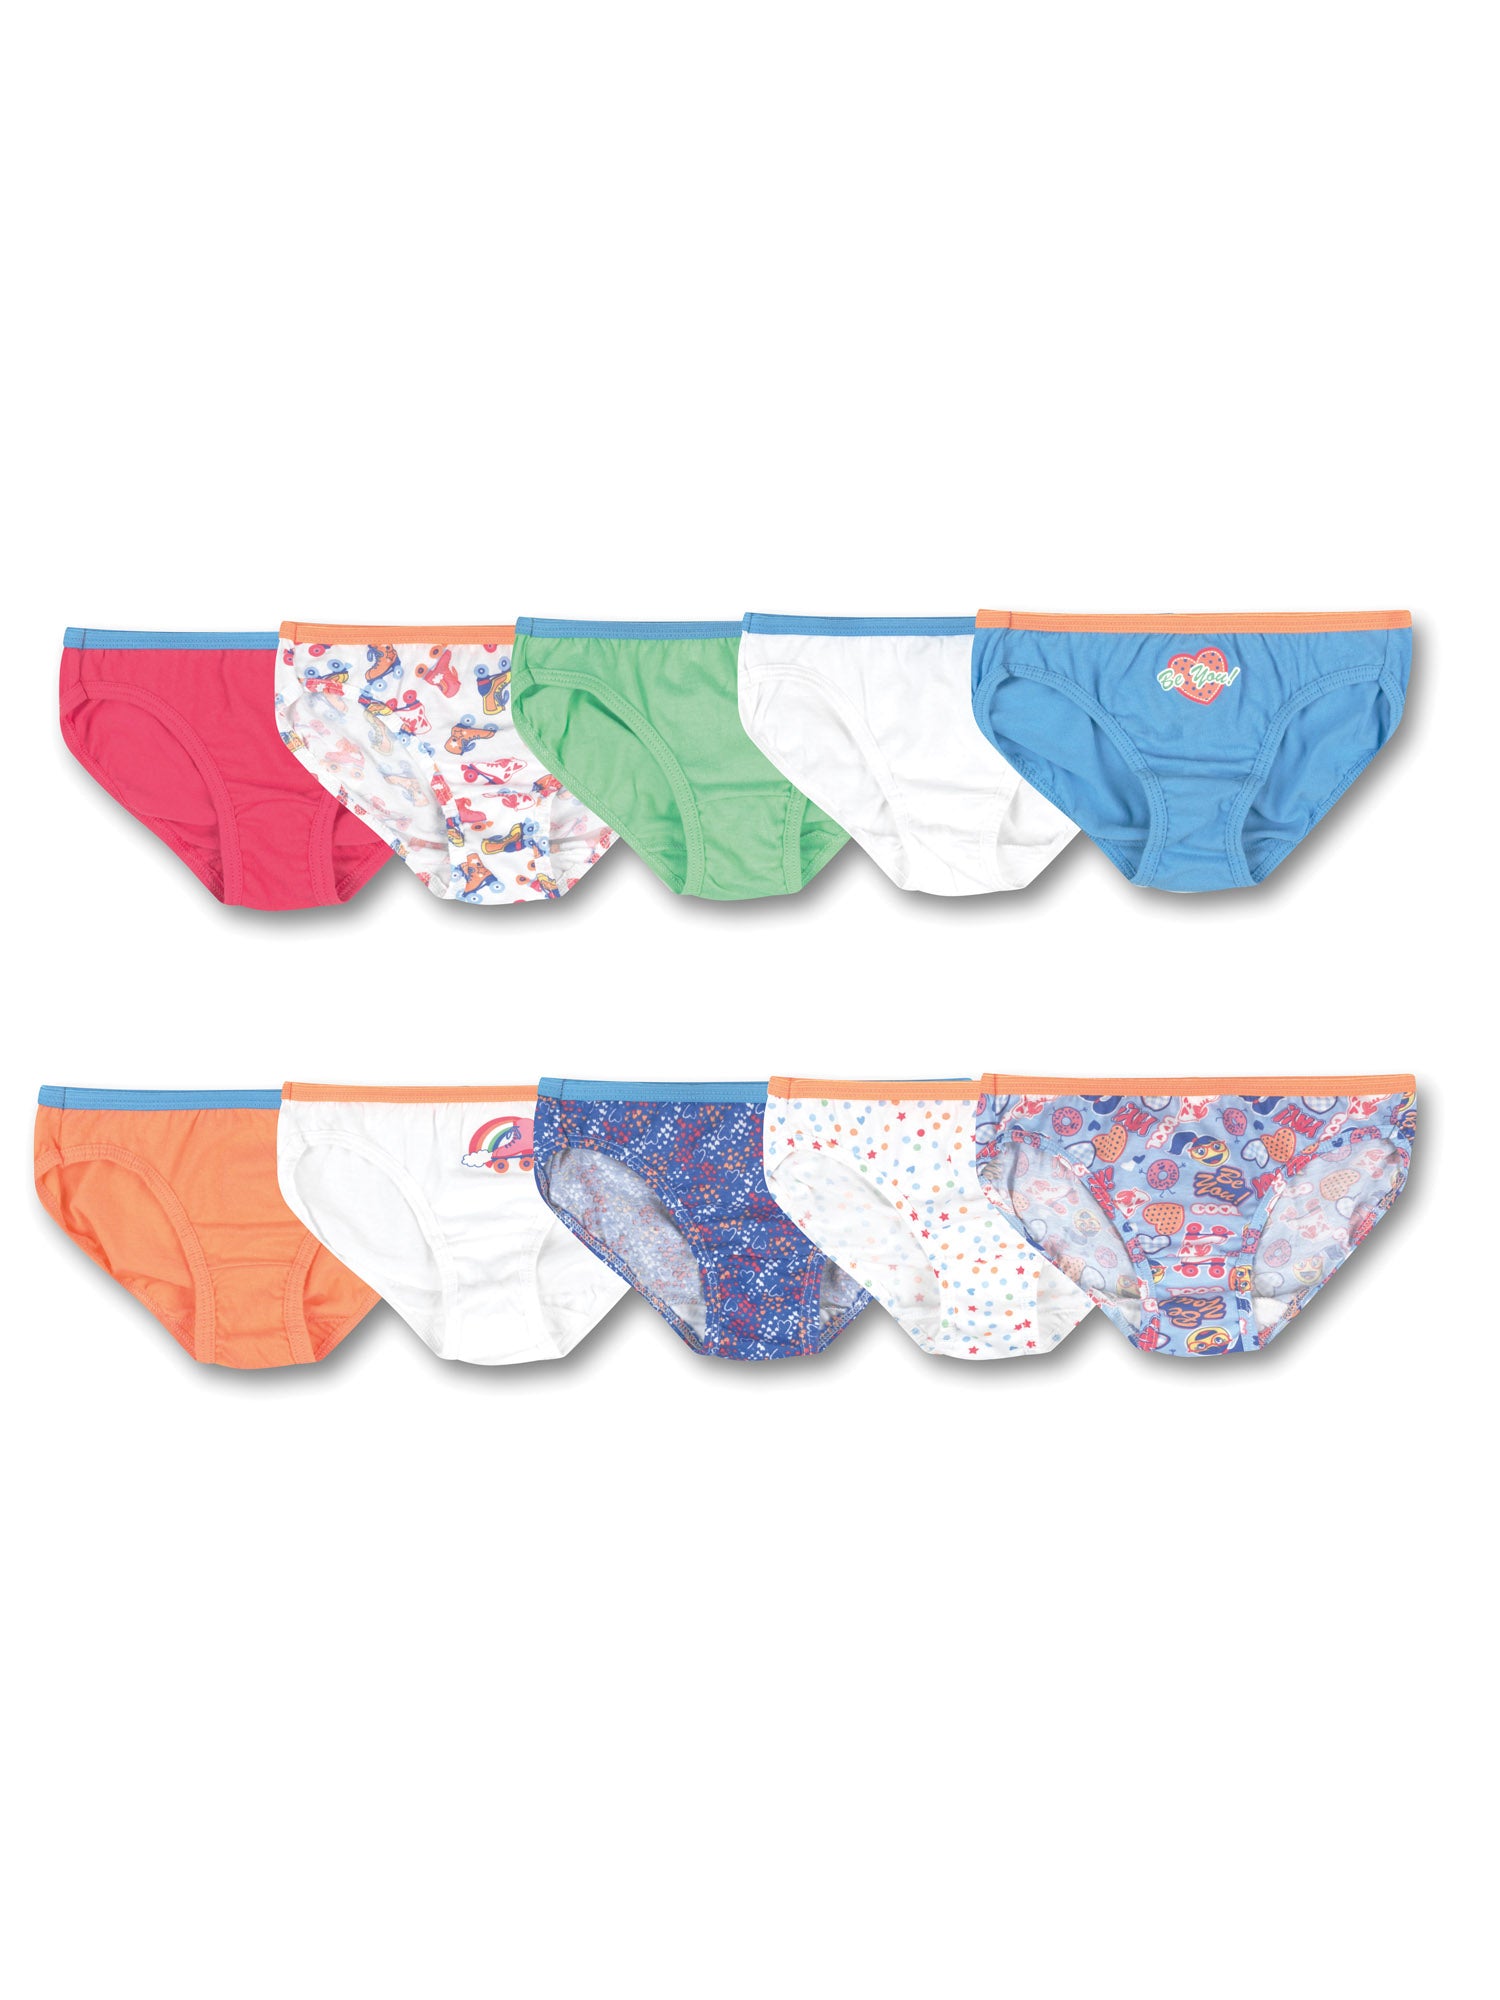 Hanes Girls Soft Tagless Bikini panties underwear- Size 12, 10